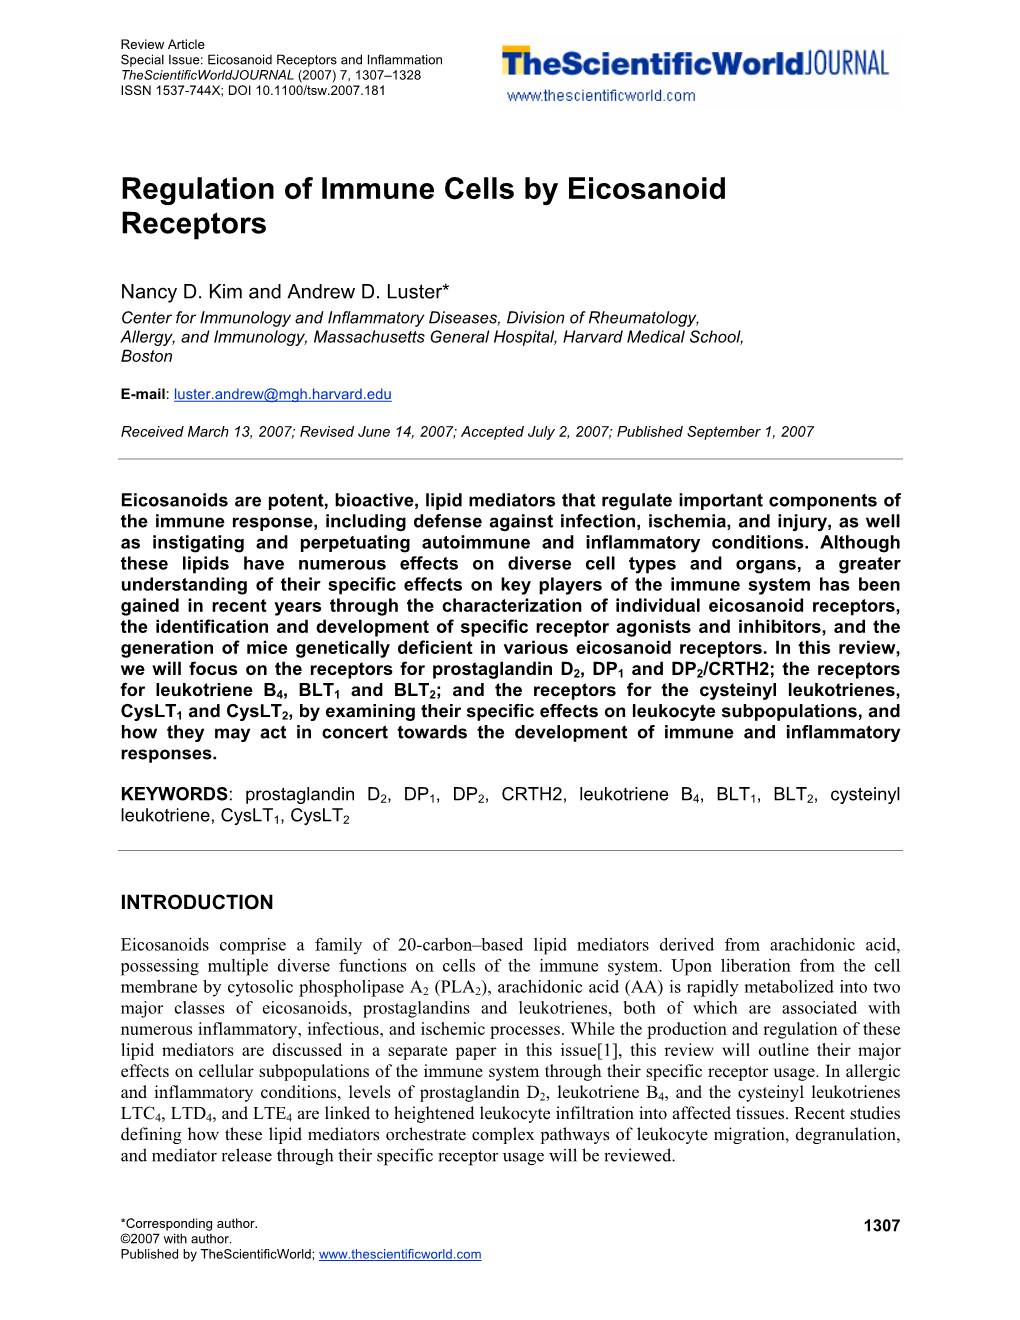 Regulation of Immune Cells by Eicosanoid Receptors